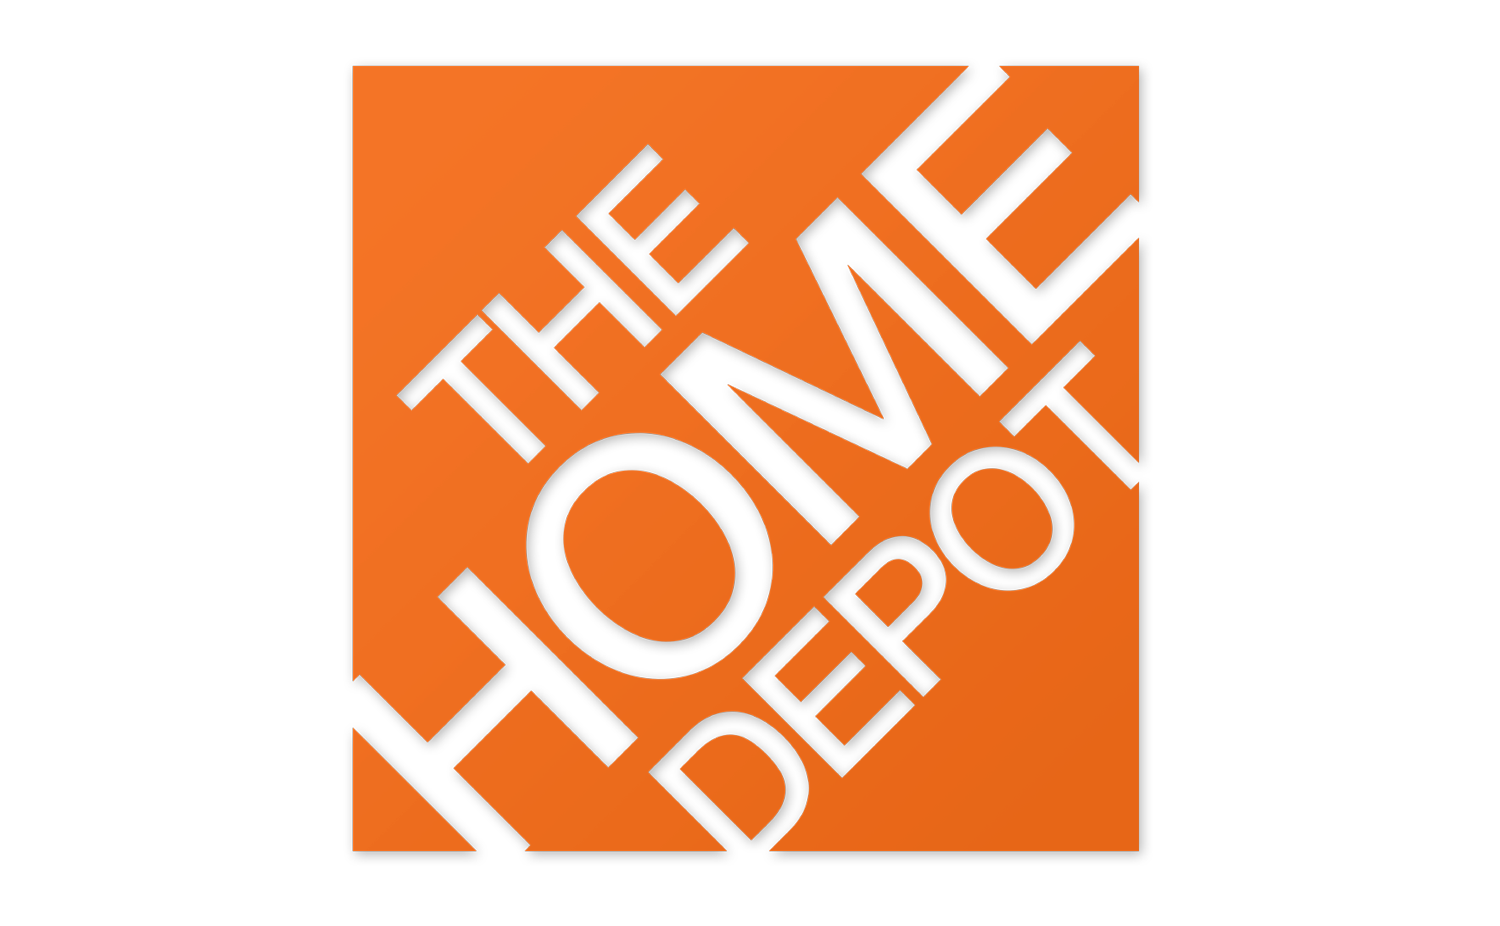 Home Depot Logo Free Download Image PNG Image